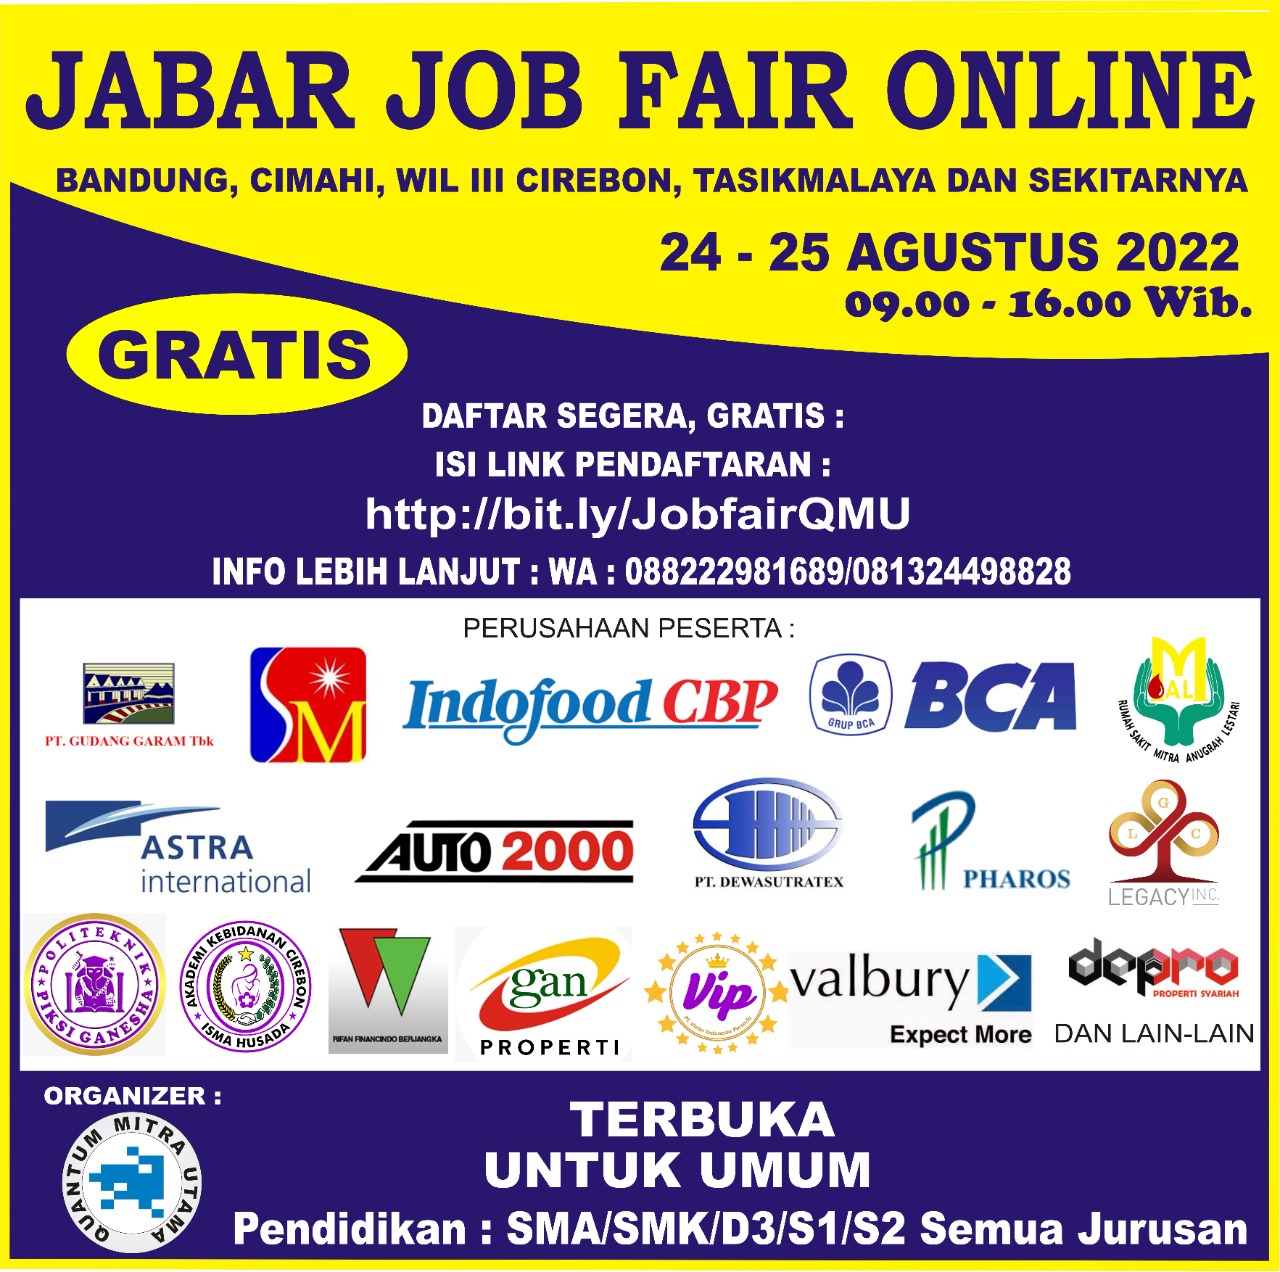 Jabar Job Fair Online 24 - 25 Agustus 2022